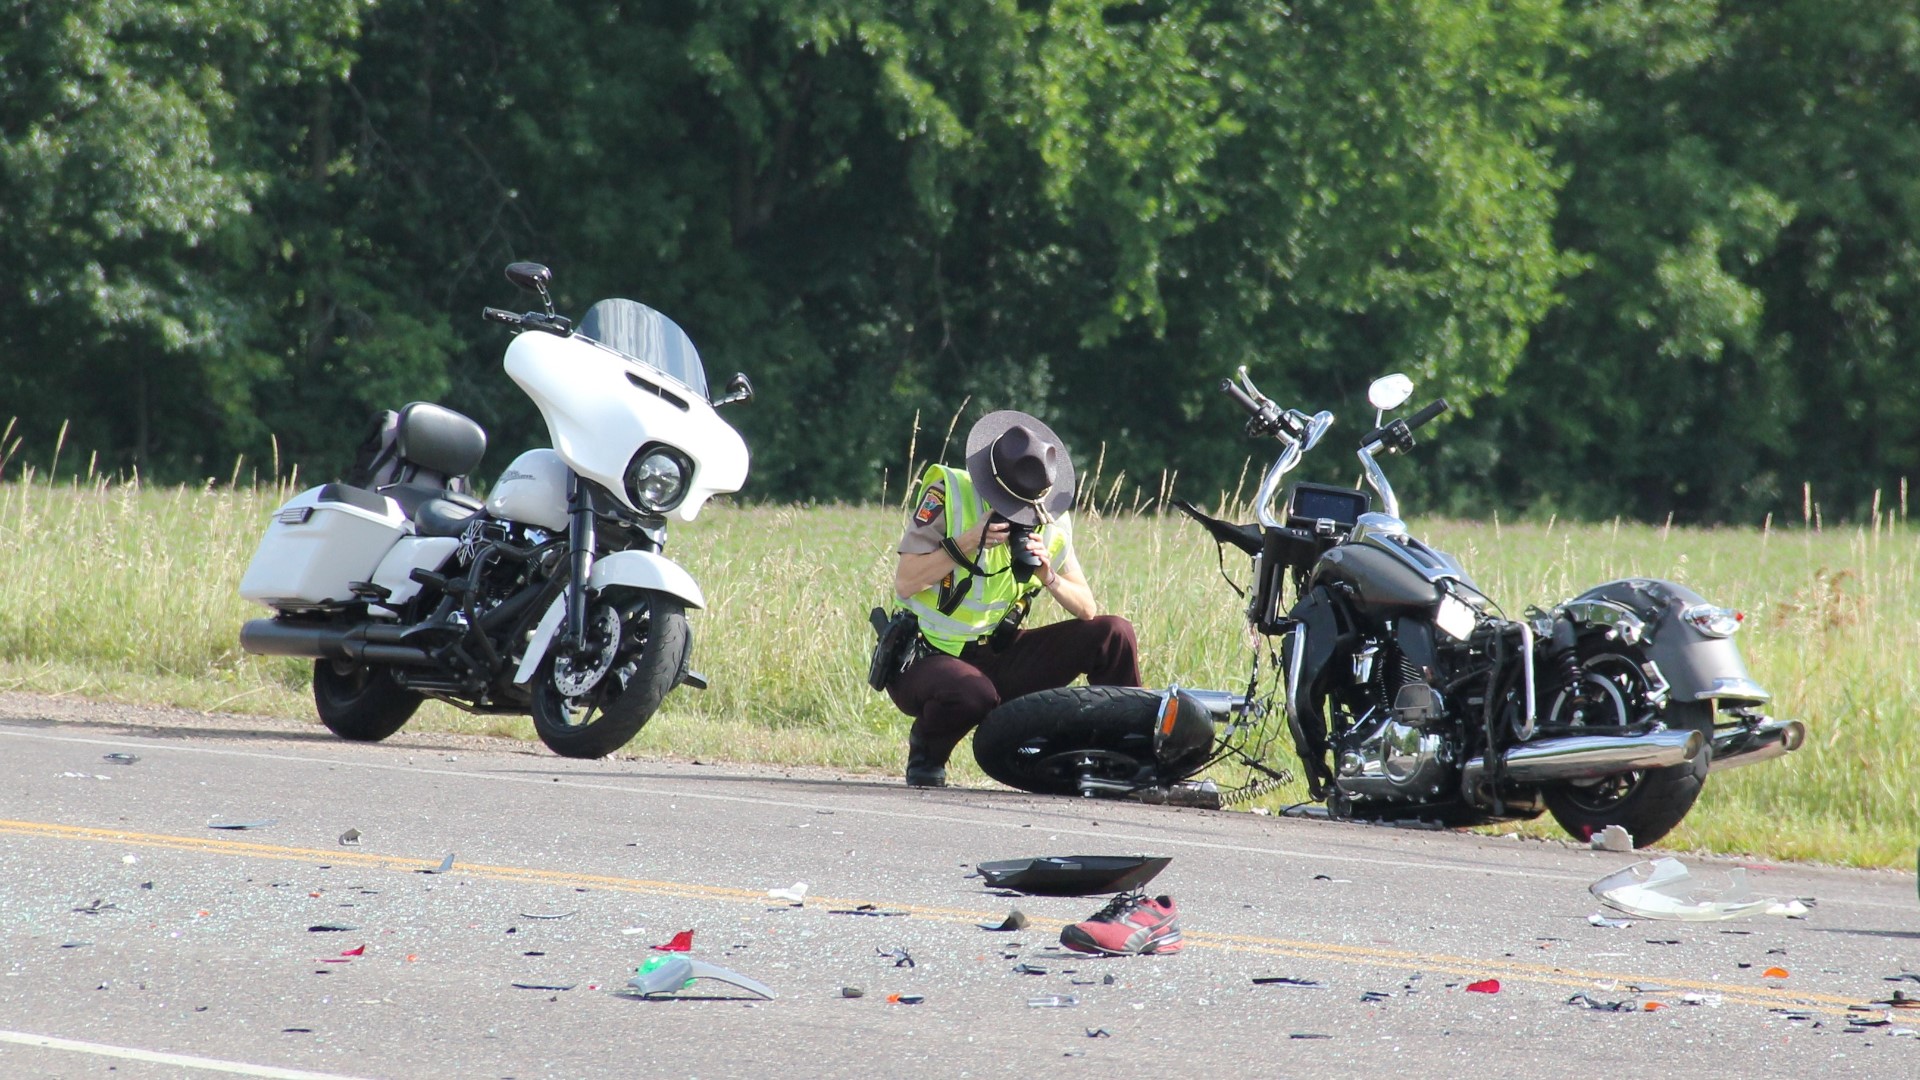 1 motorcyclist dead, 6 injured after crash in central MN